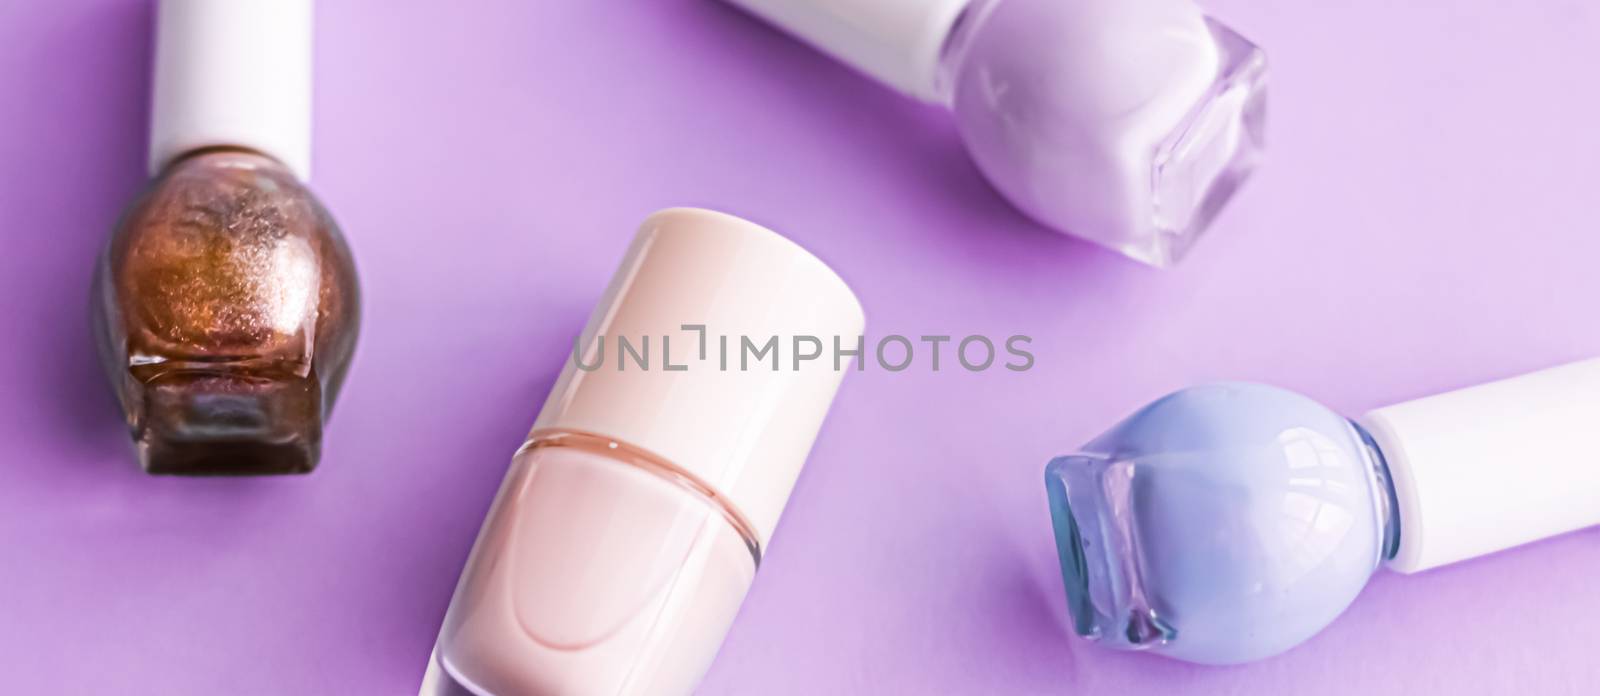 Nail polish bottles on purple background, beauty branding